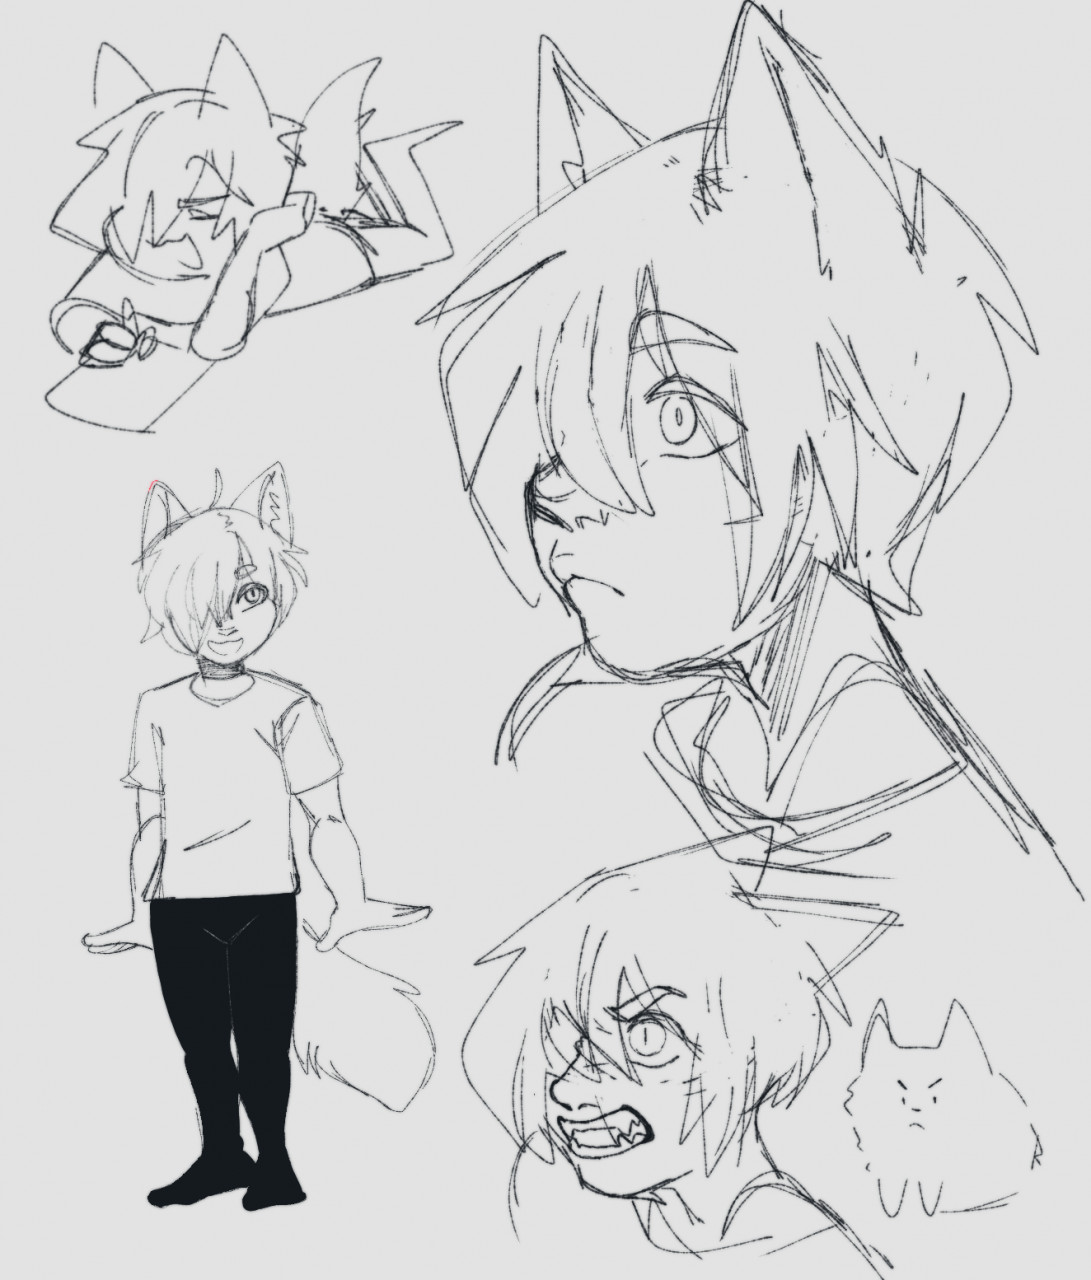 wolf boy anime drawing